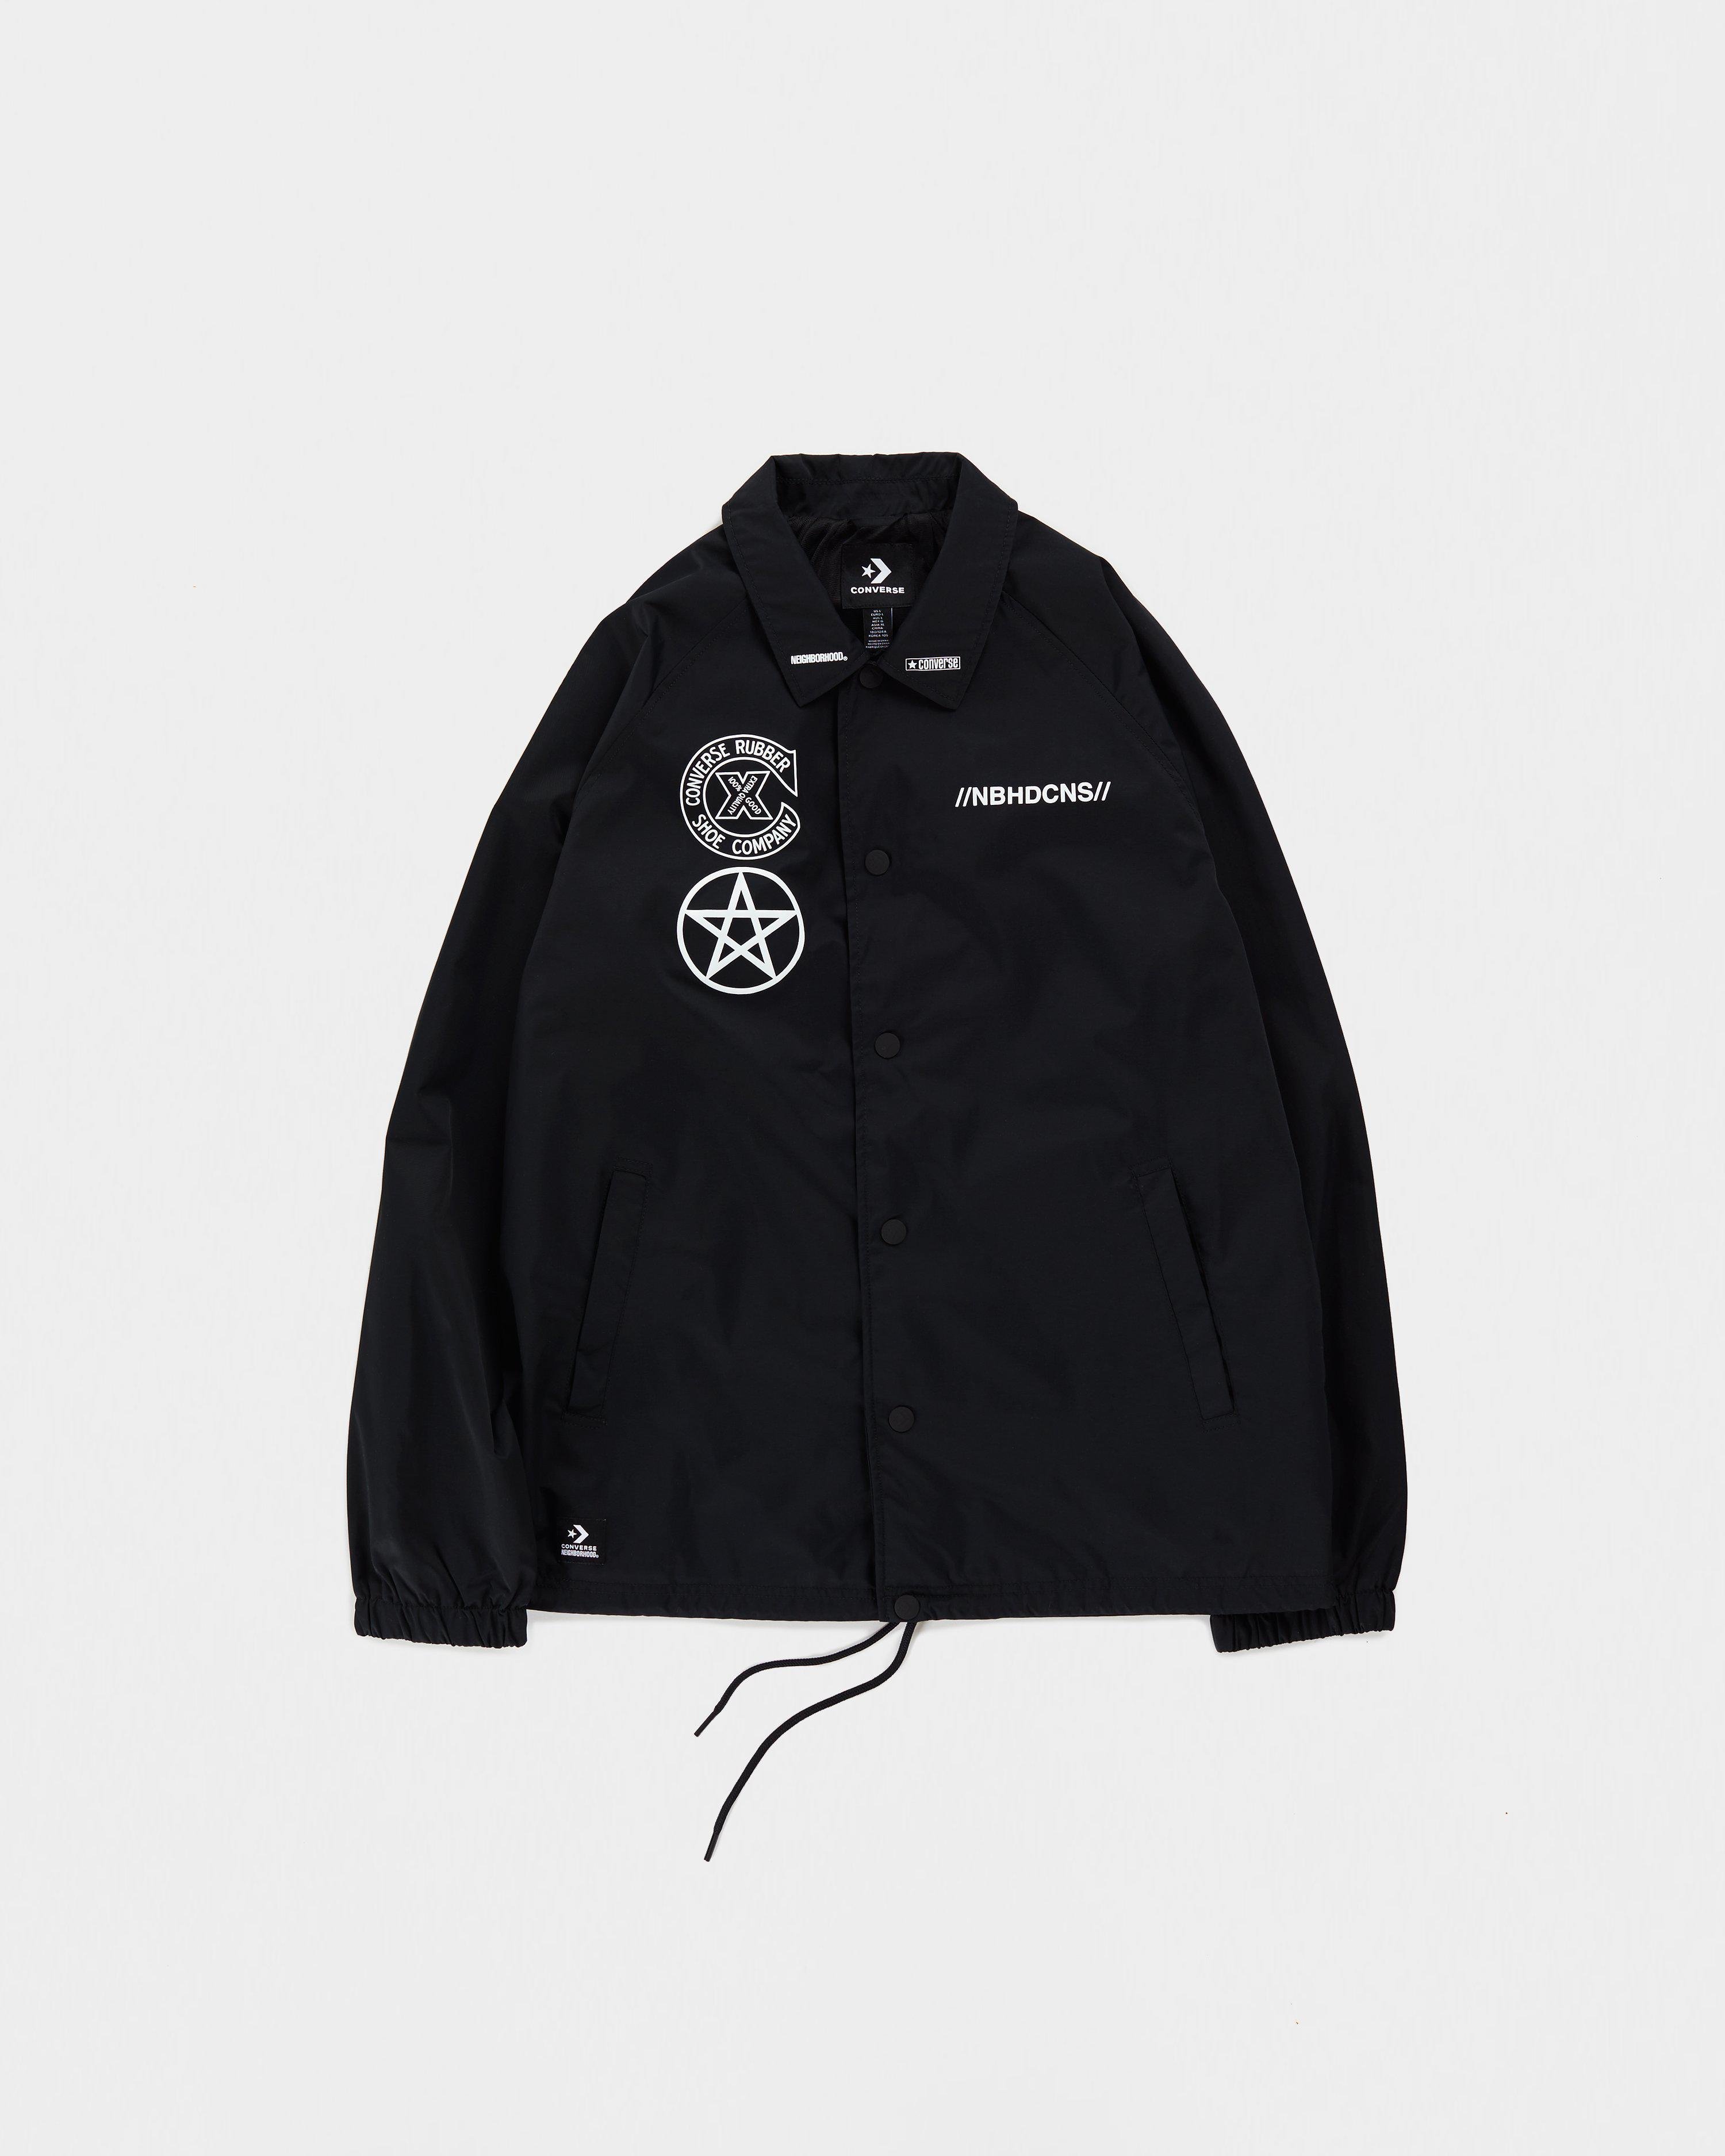 Black Coaches Jacket by CONVERSE X NBHD